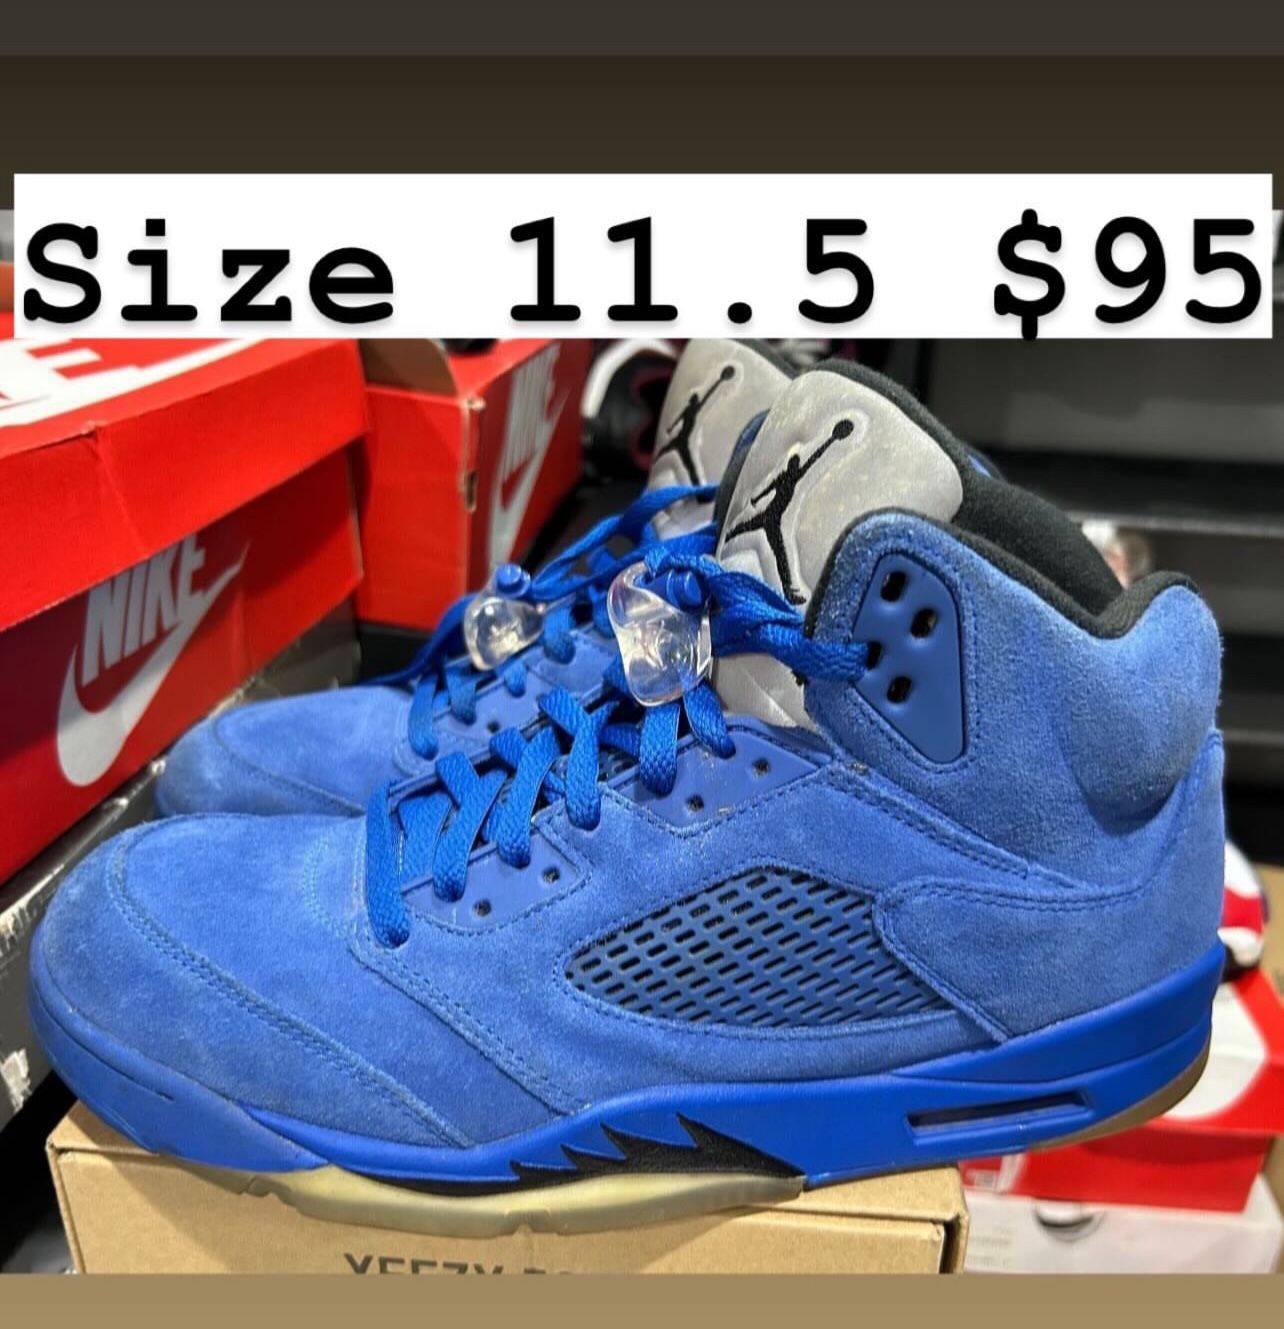 Jordan Retro 5s Blue Suede Size 11.5